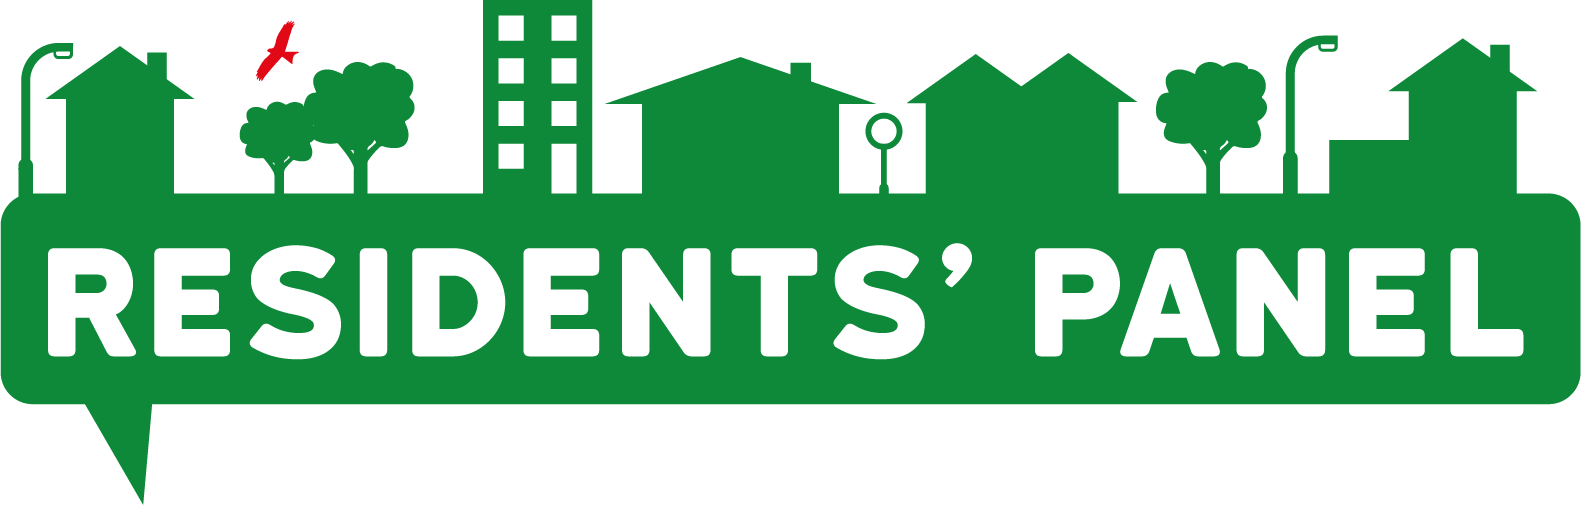 Residents' panel logo